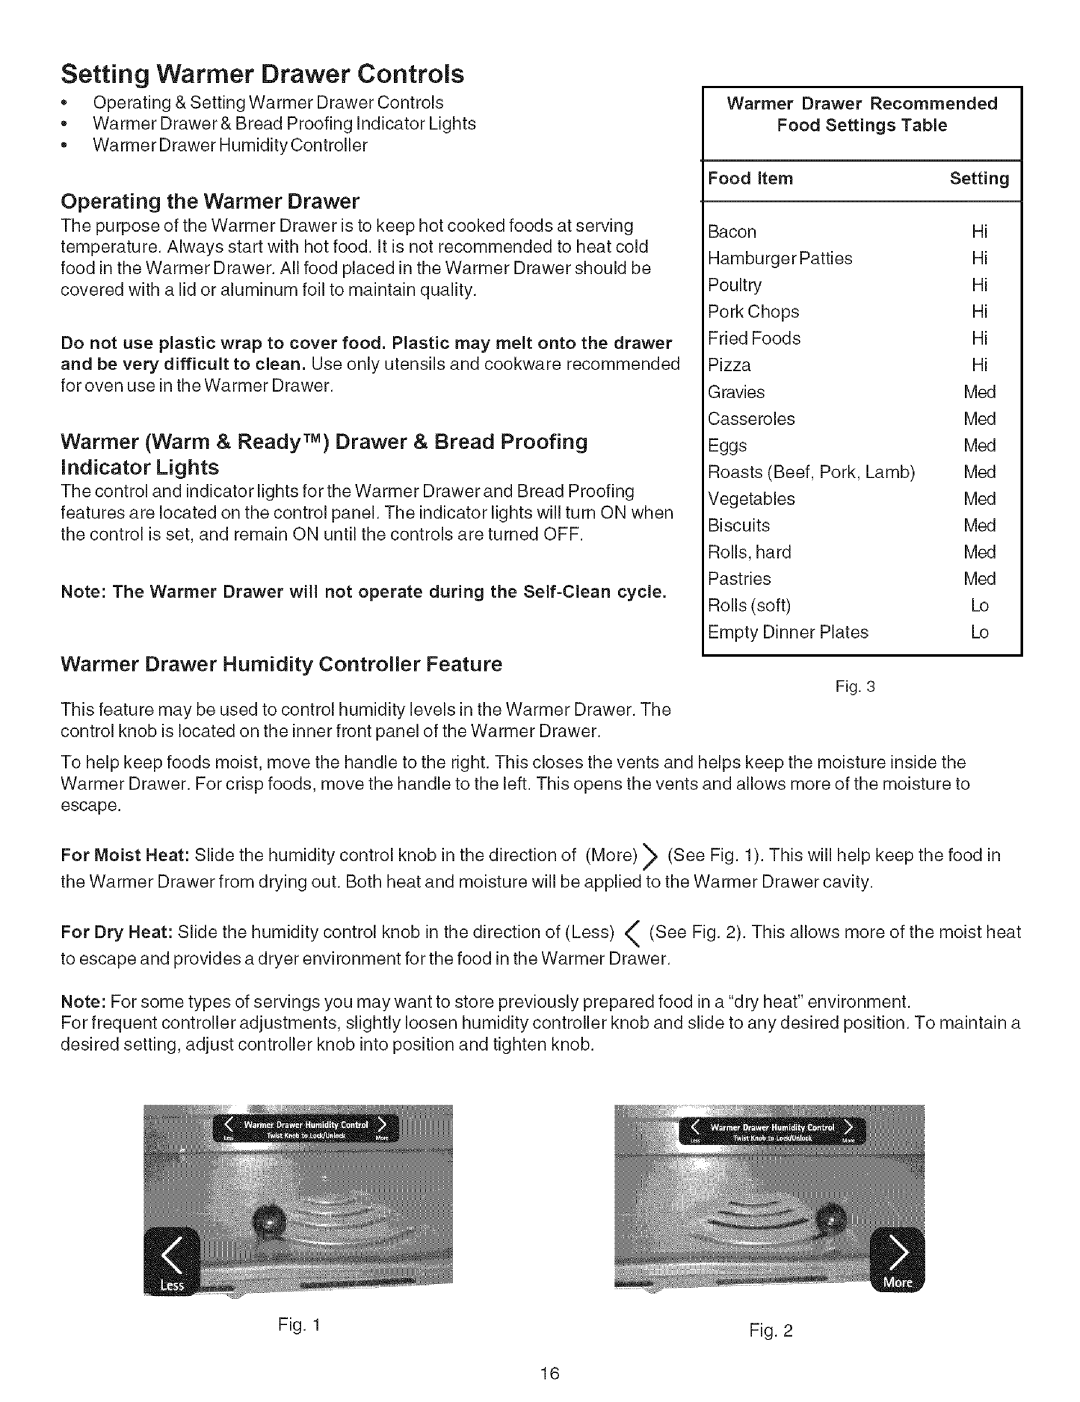 Kenmore 790.9659 manual Setting Warmer Drawer Controls, Warmer Warm & Ready TM Drawer & Bread Proofing, Indicator Lights 